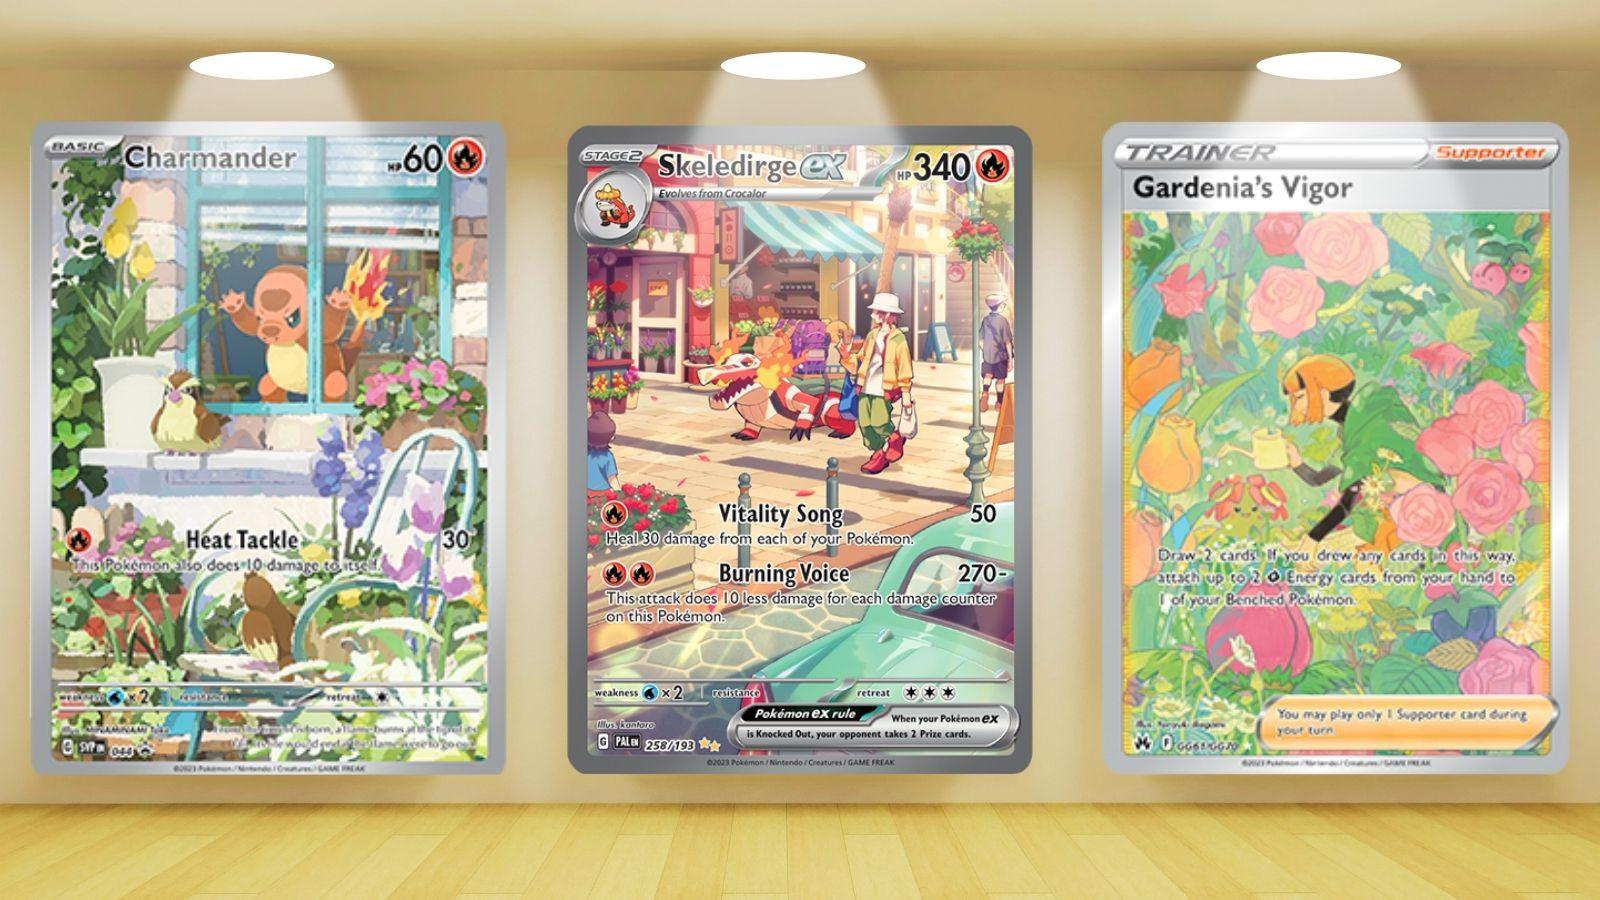 Pokémon Go Master League Mega Edition: Best Pokémon - Video Games on Sports  Illustrated